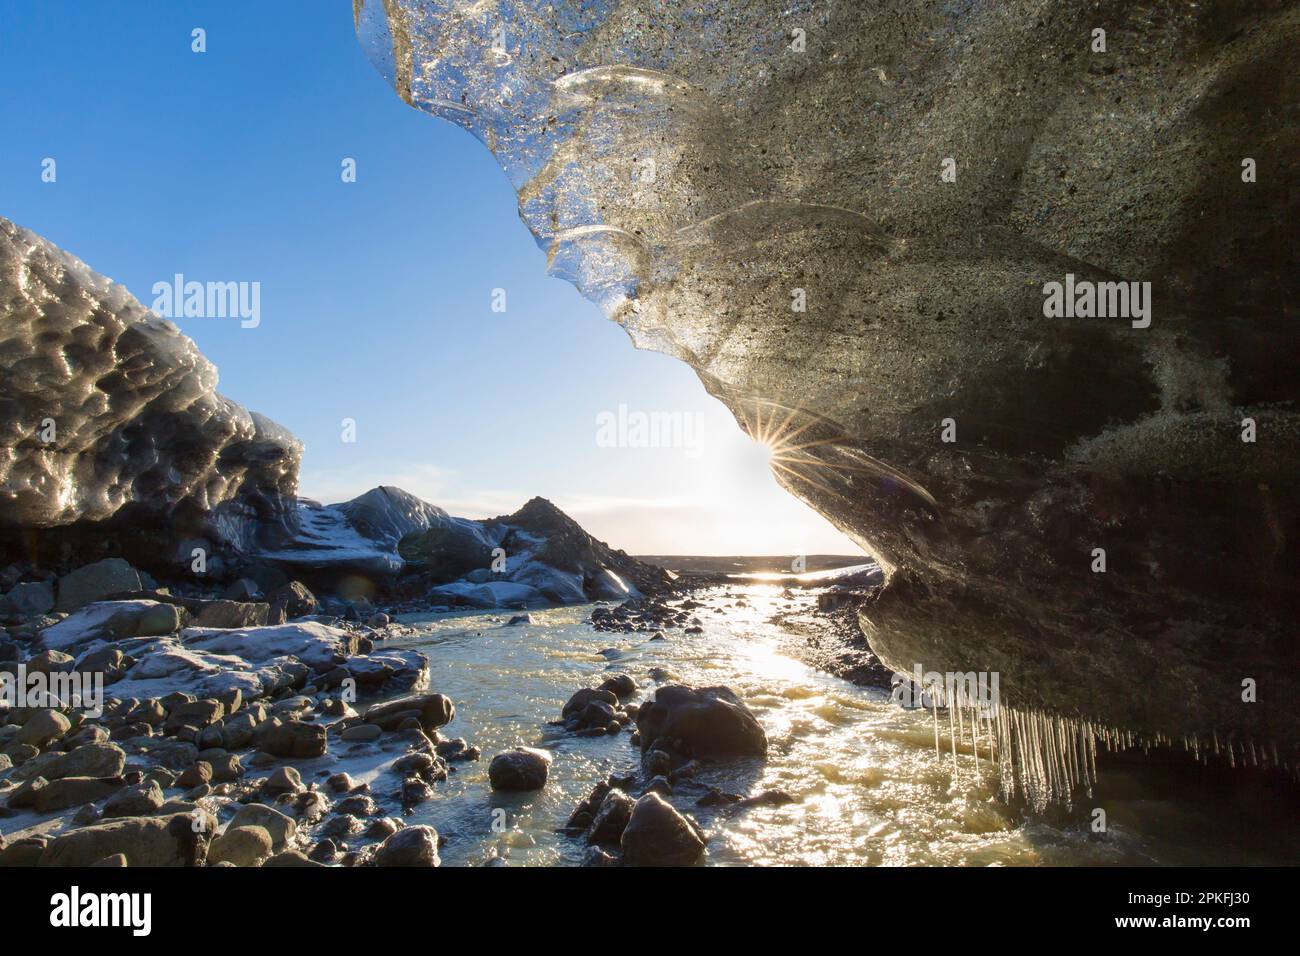 Ingresso alla grotta di ghiaccio naturale Crystal nel ghiacciaio Breiðamerkurjökull / Breidamerkurjokull nel Parco Nazionale Vatnajökull, Islanda Foto Stock